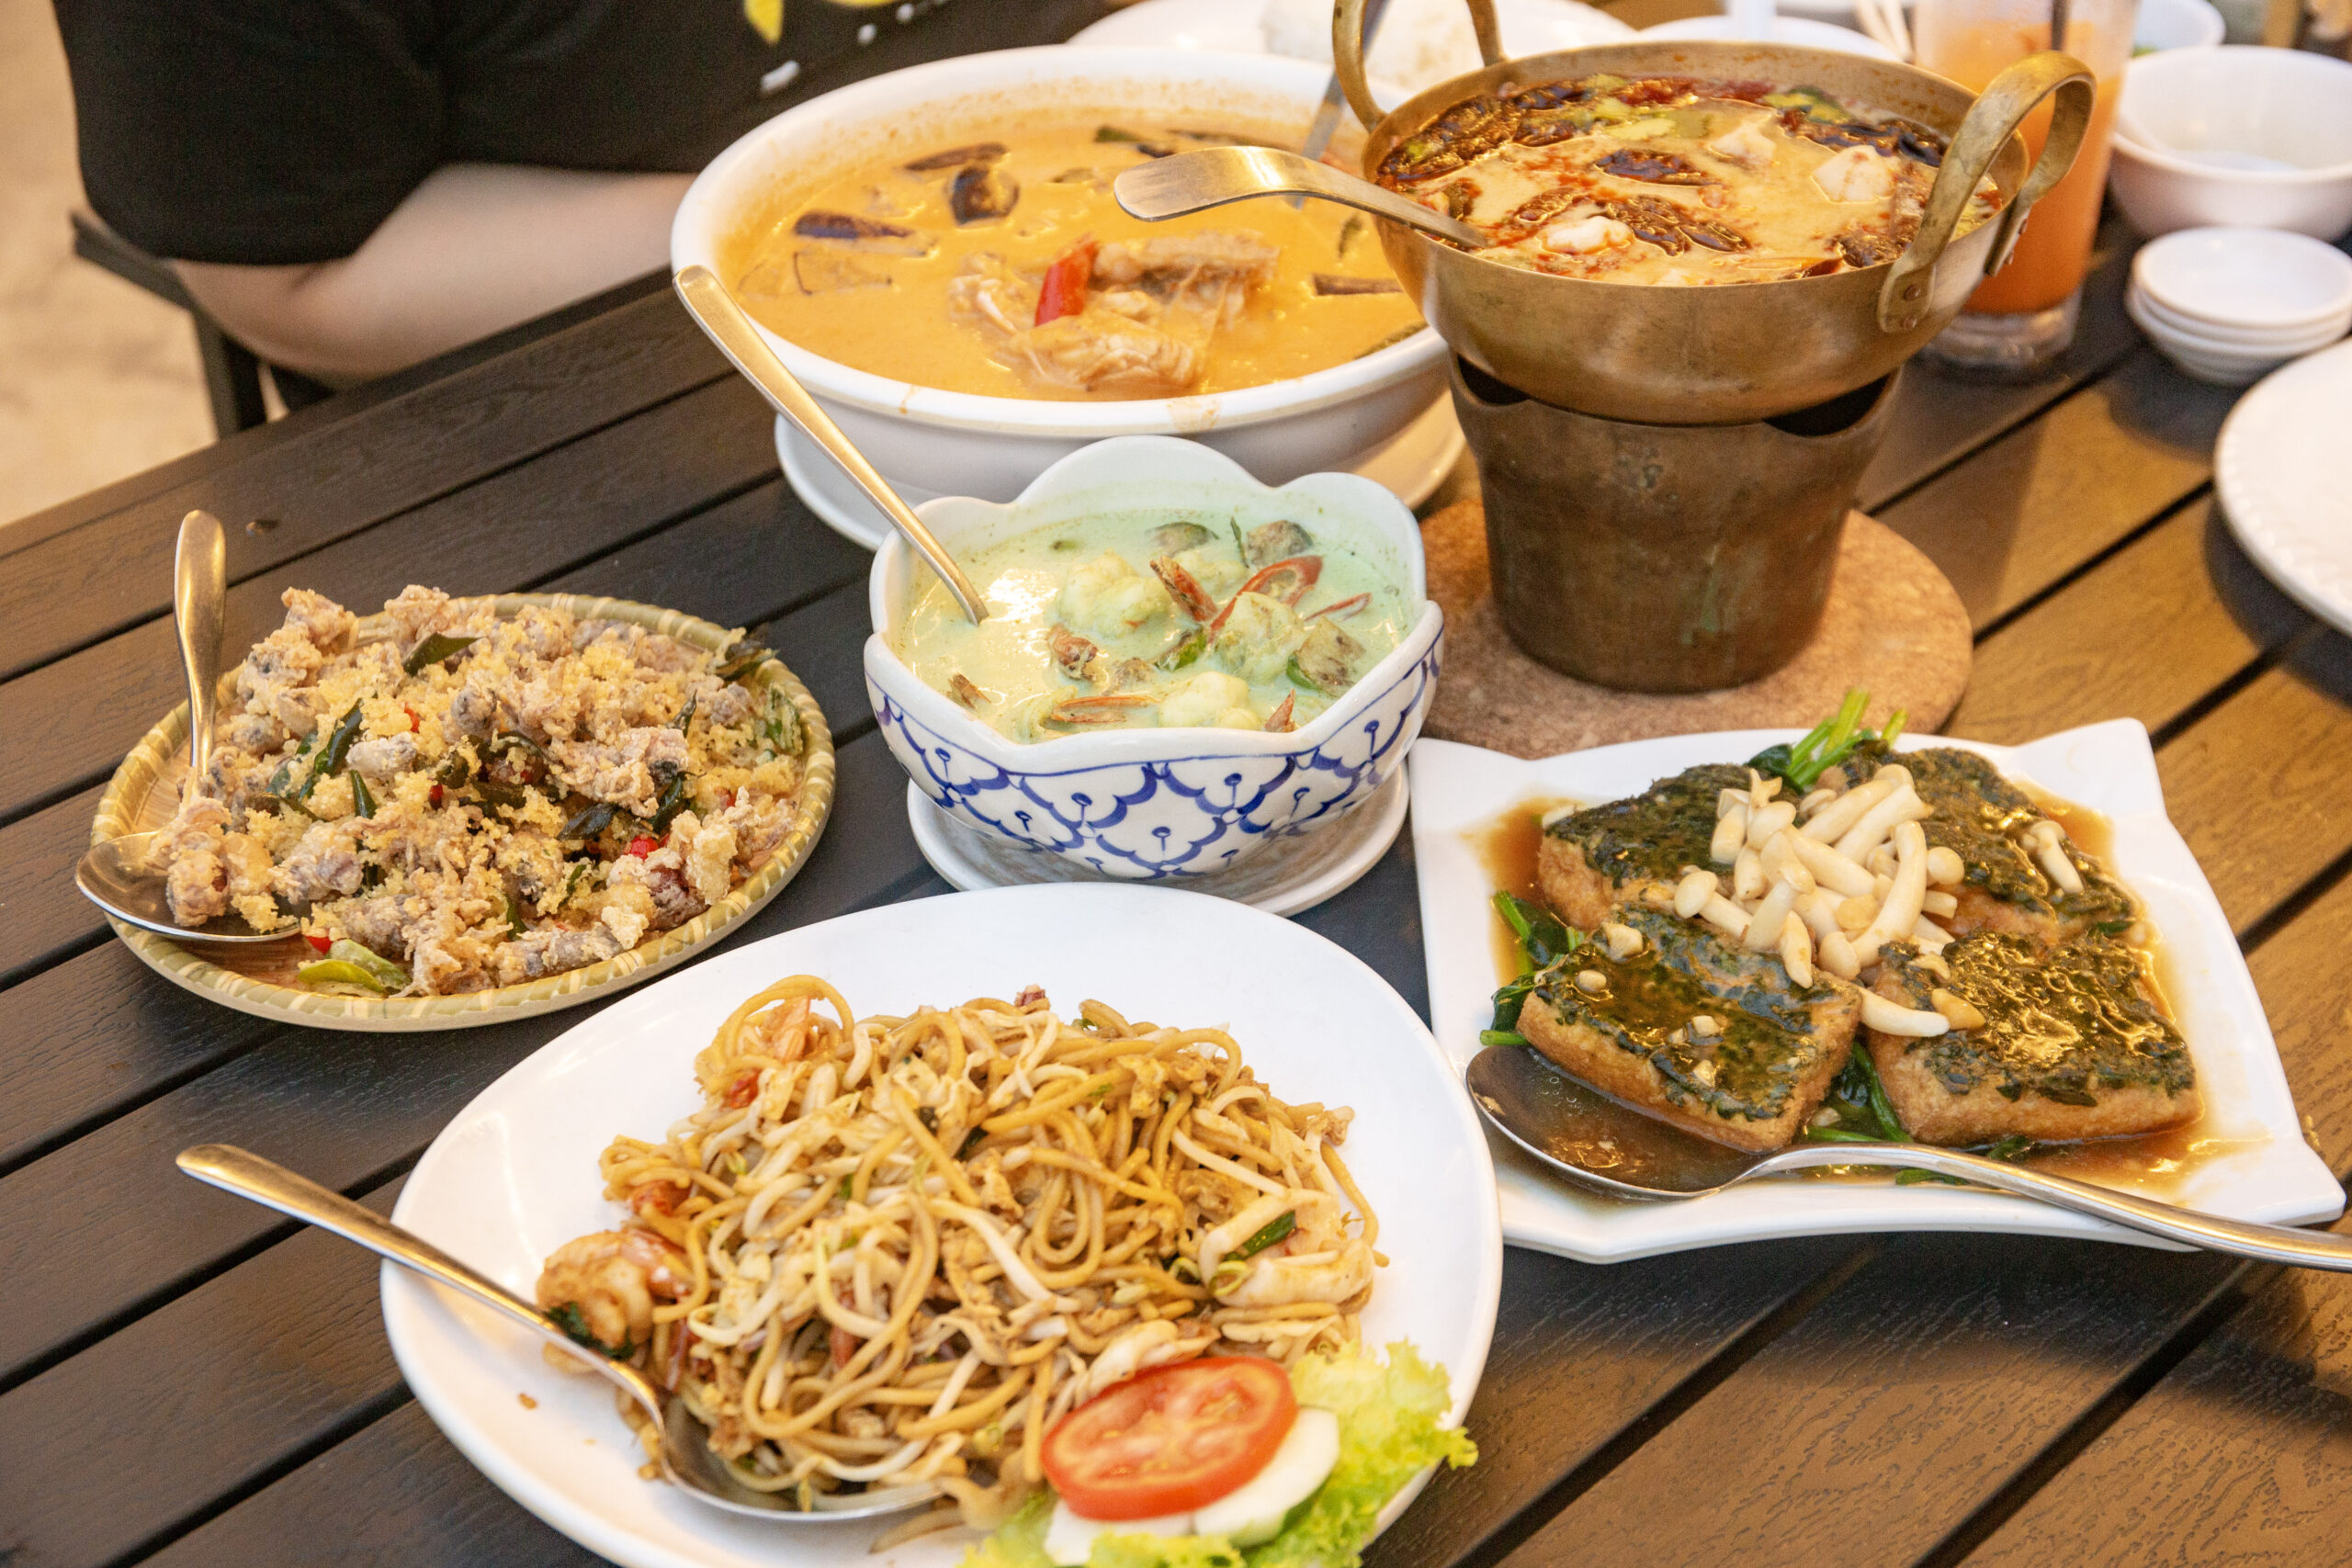 Batam food places - Jumbo Thai Kitchen overall